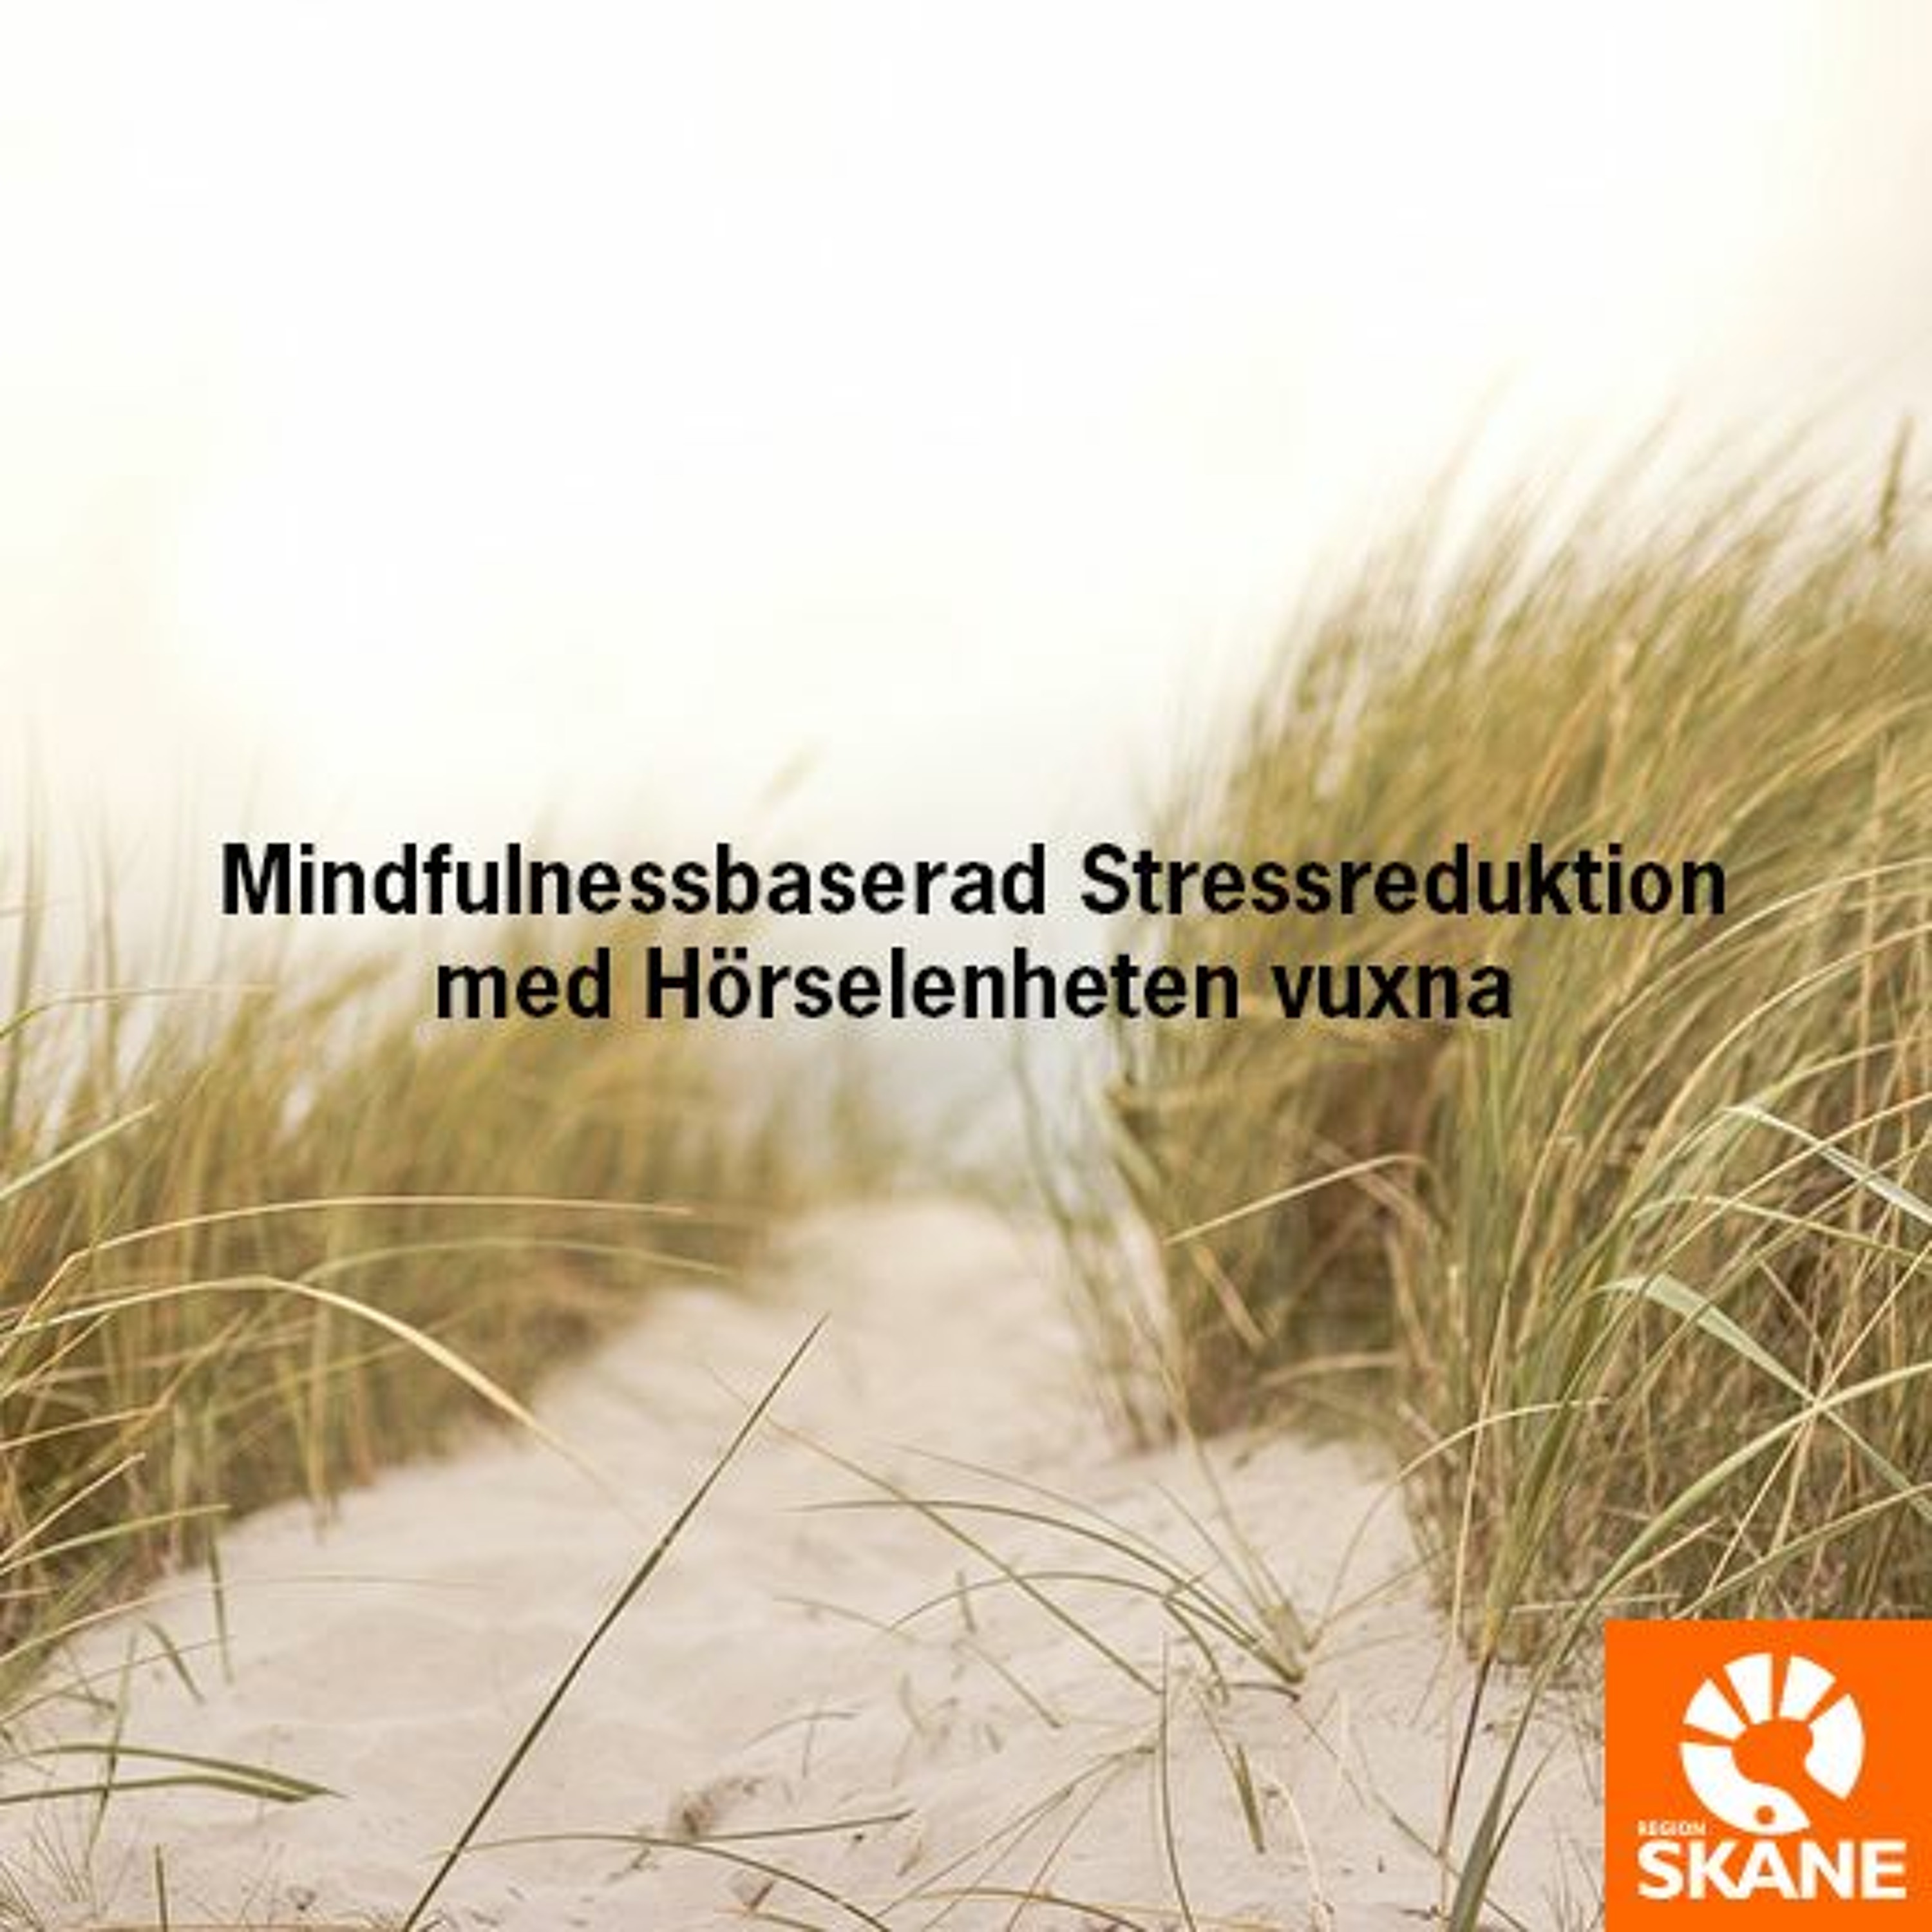 Mindfulnessbaserad Stressreduktion - Introduktion till yoga